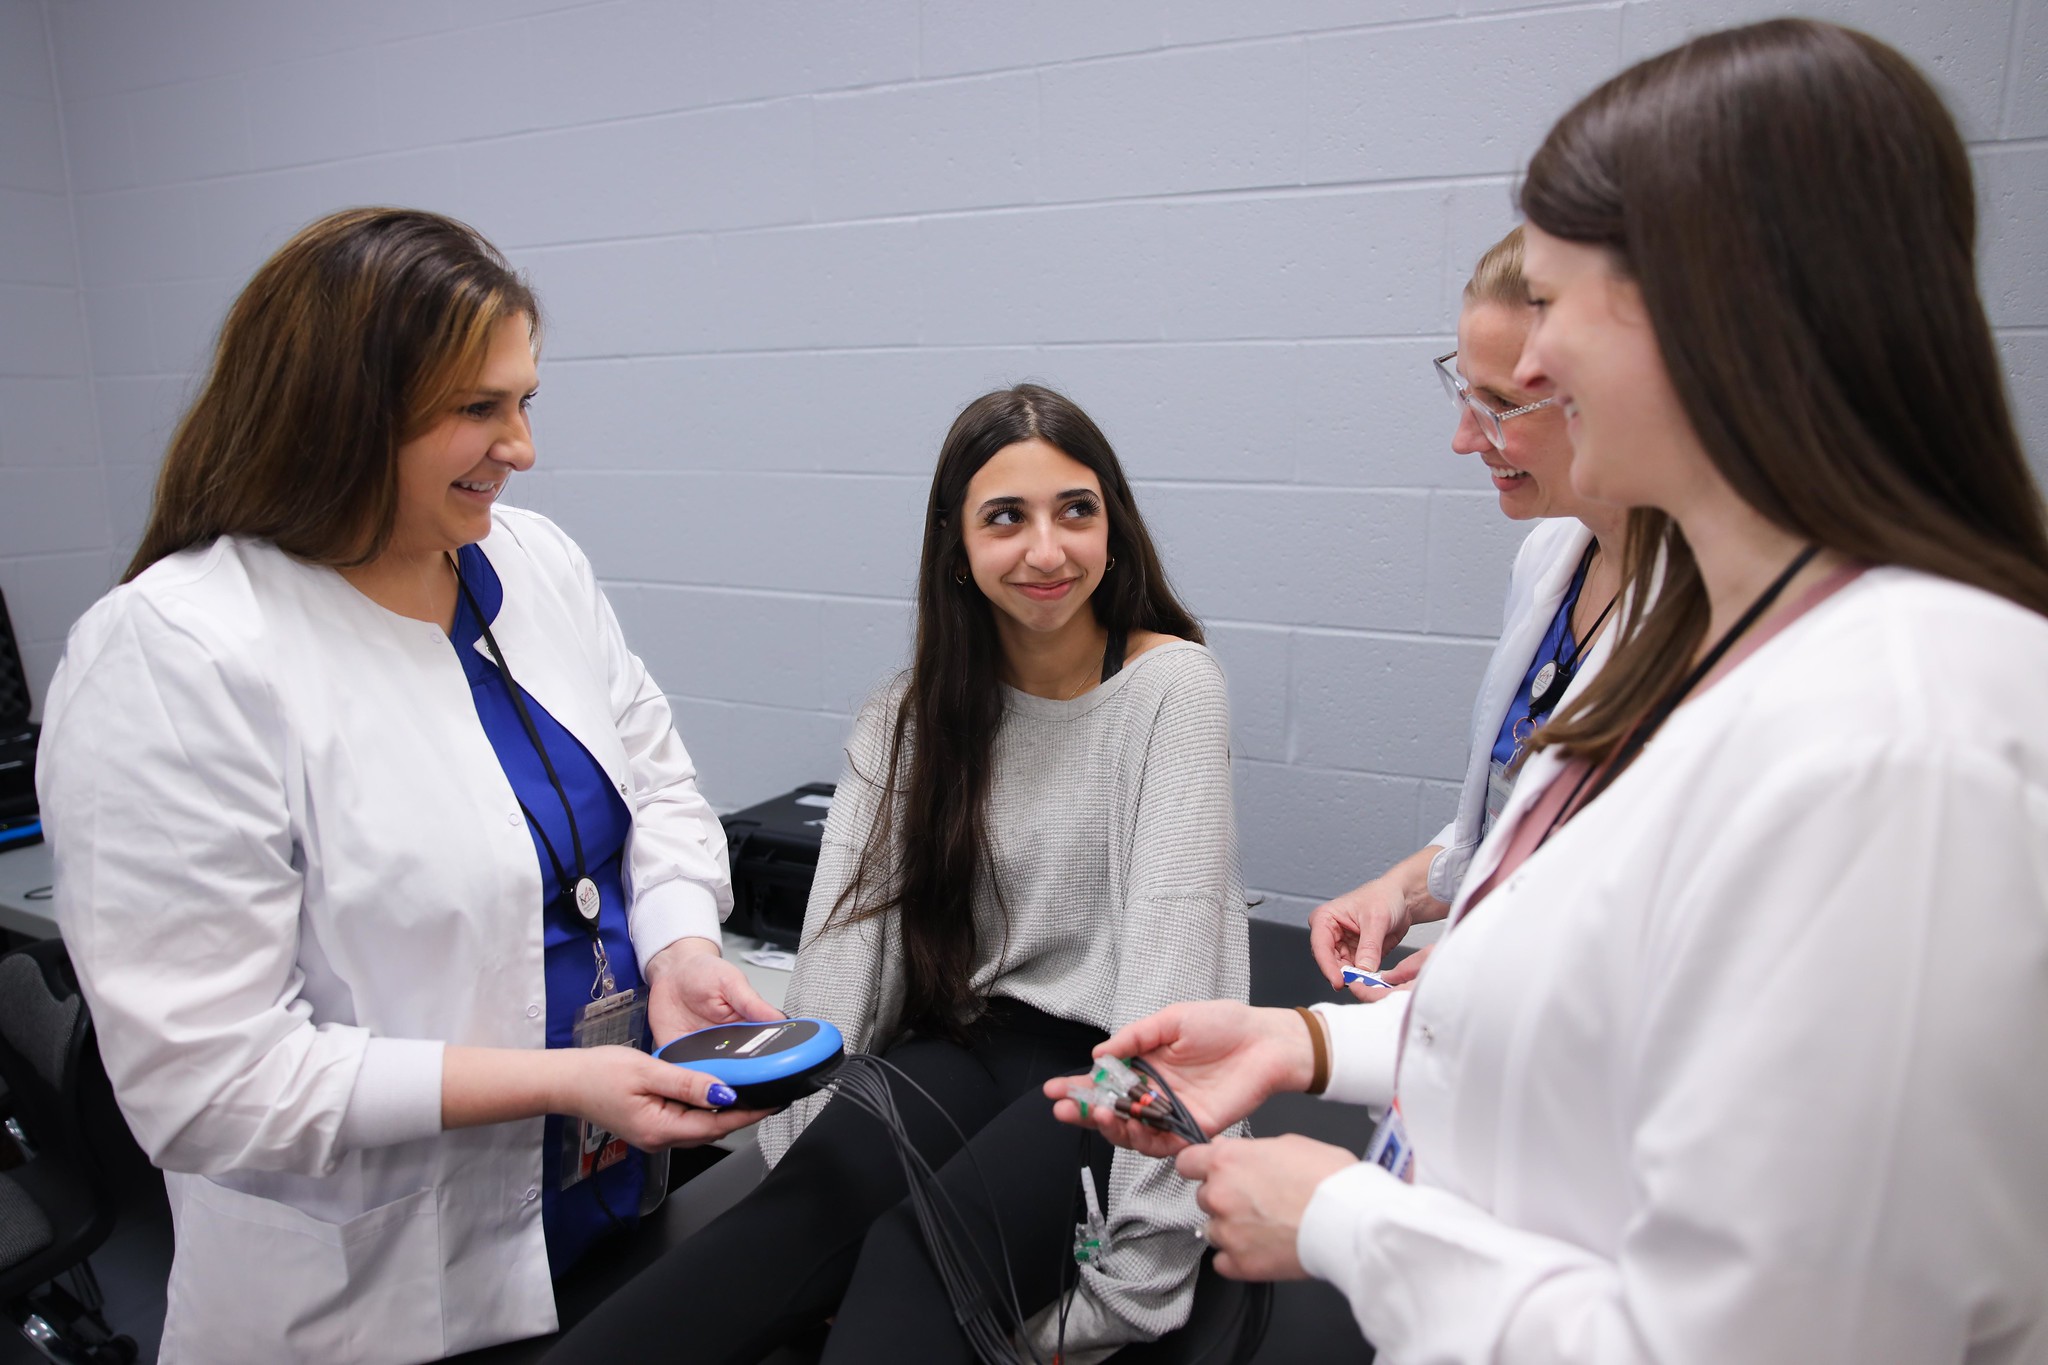 Katy ISD's Groundbreaking ECG Screening Initiative Prioritizes Student Health